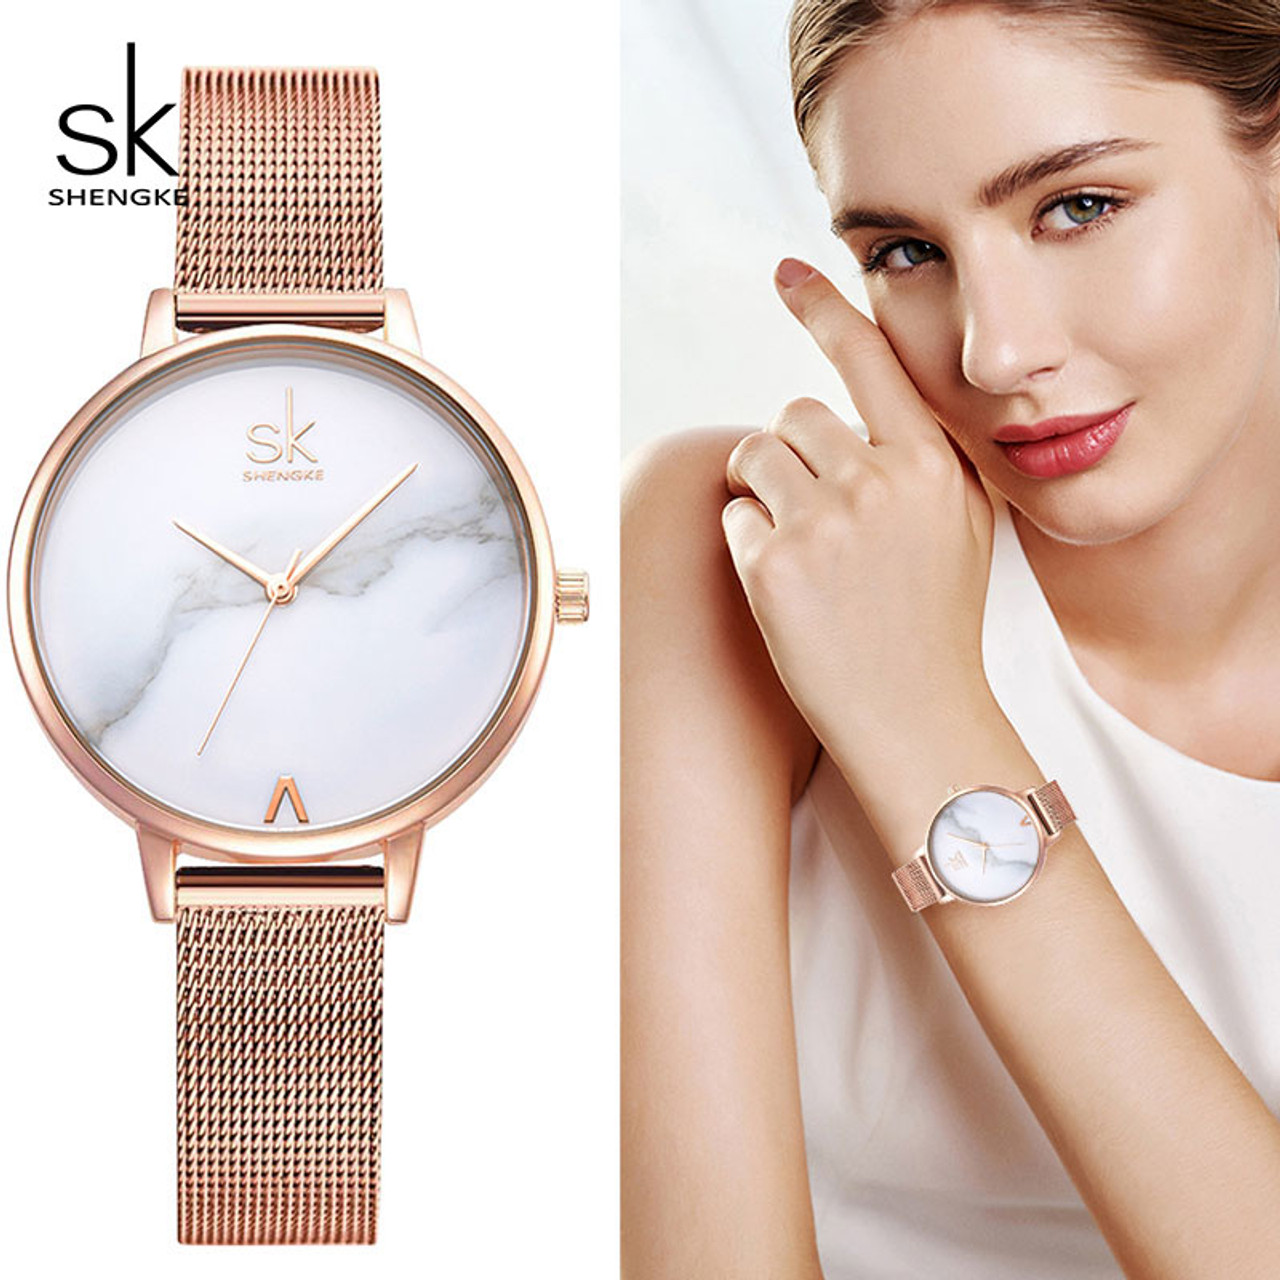 Shengke Brand Wife s Gift Women s Quartz Watch Sets Fashion Creative Crystal Design Bracelet Necklace 97472.1575090465